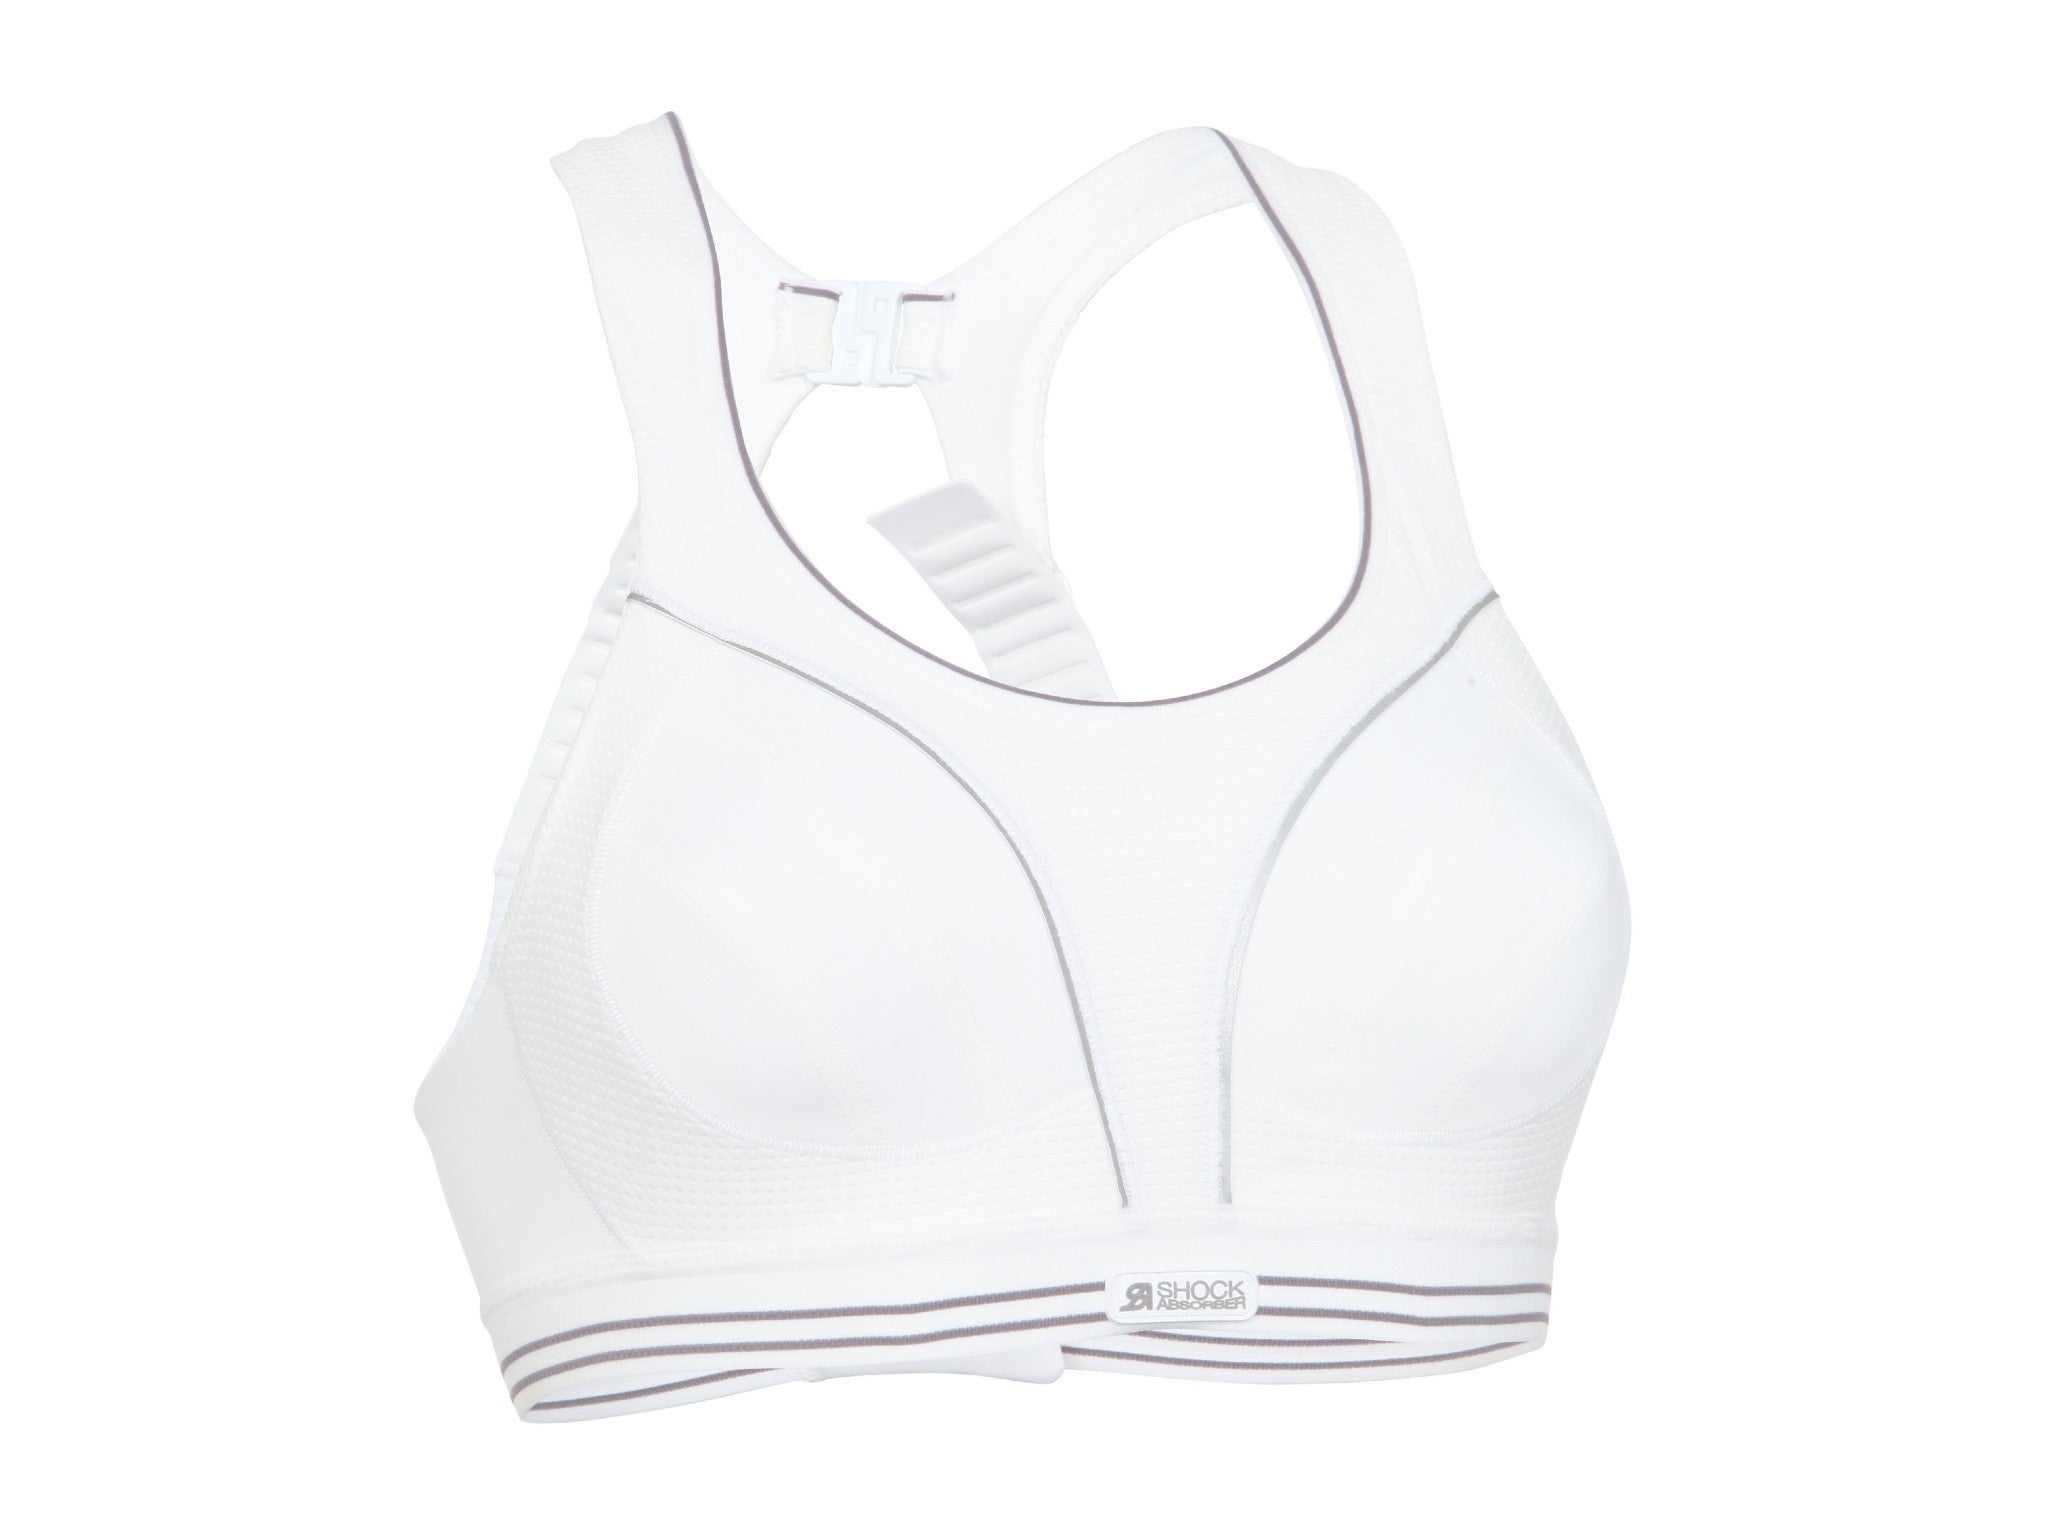 Medium support bra for women adidas Ultimatea Run - Bras - Women's clothing  - Fitness